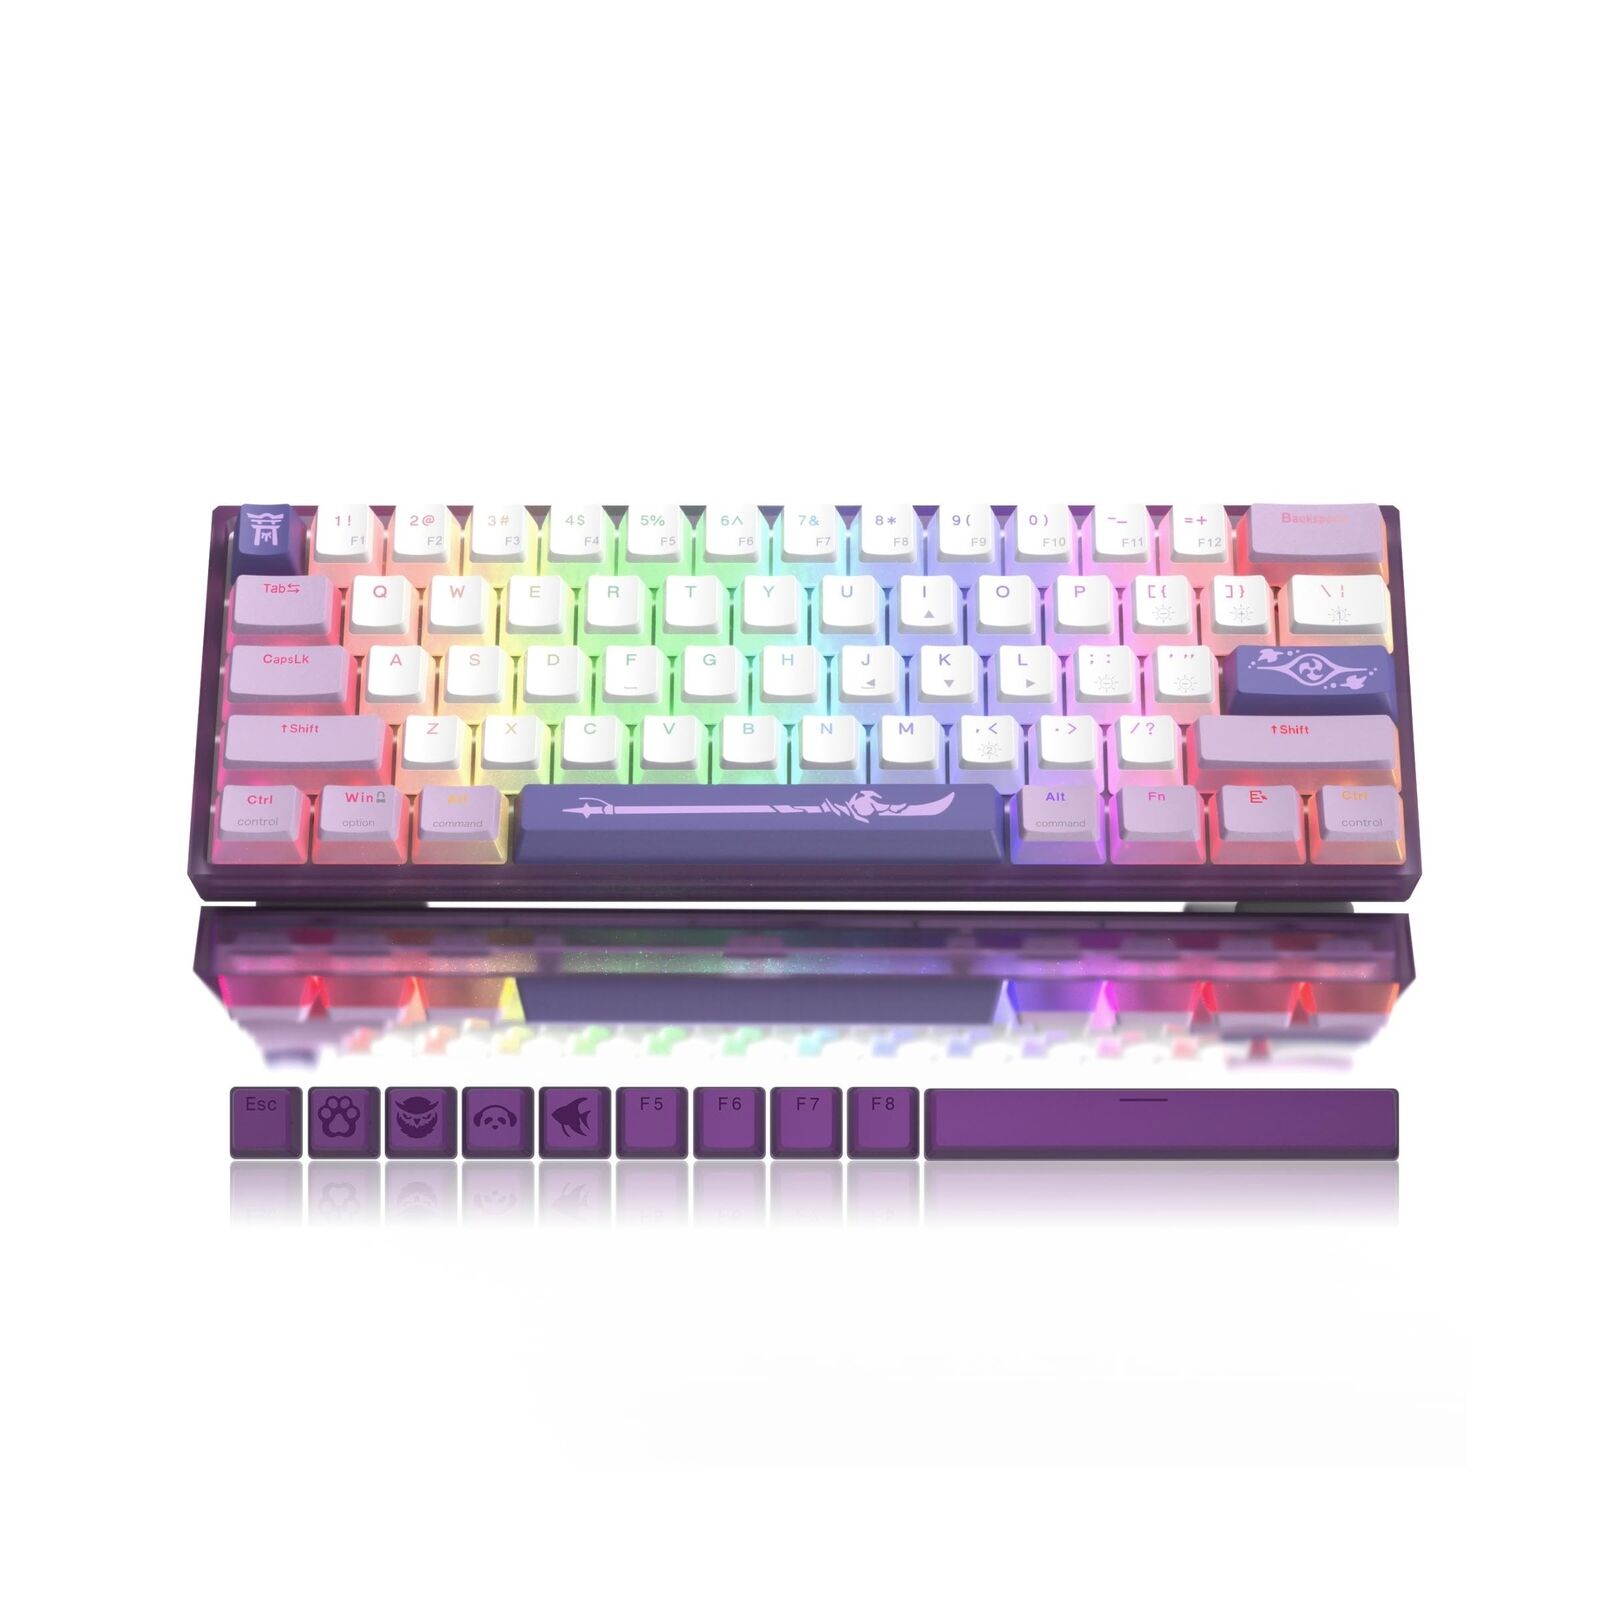 60% Percent Keyboard, WK61 Mechanical RGB Wired Gaming Keyboard, Hot-Swappabl...